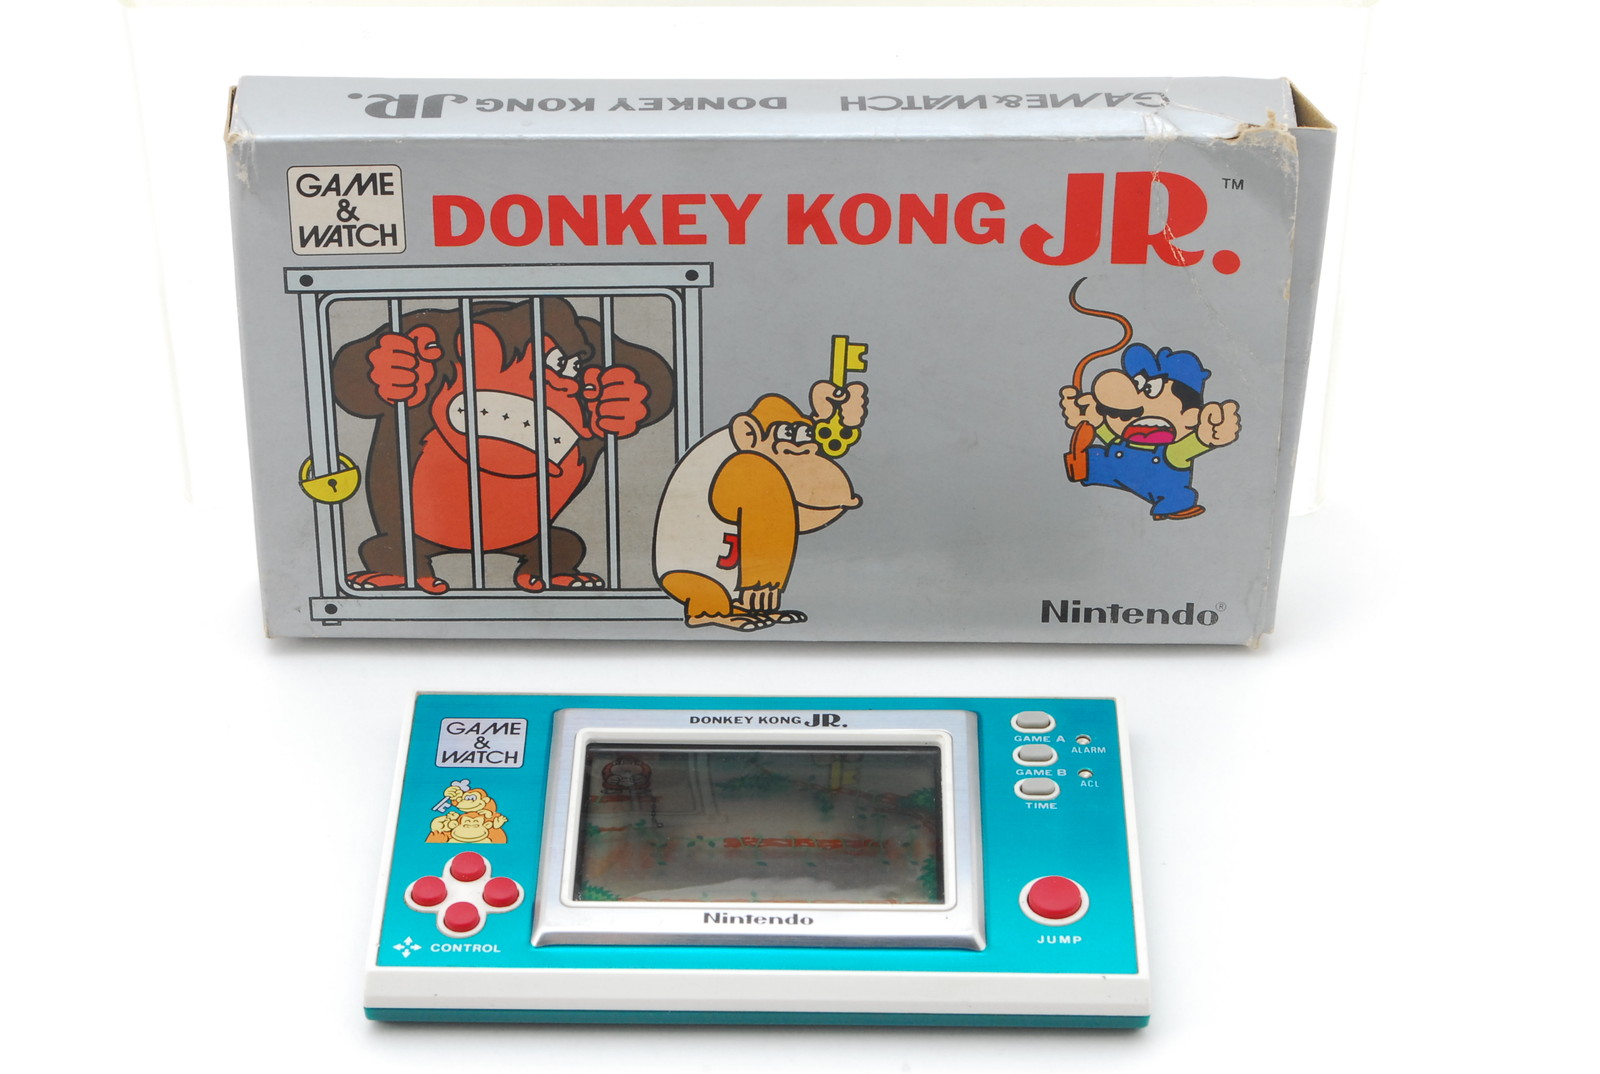 PROMOTION. READ EXC+5 Nintendo Game and Watch Donkey Kong Jr. DJ-101, Box 1982 from Japan EXC+5 닌텐도 게임을 읽고 동키 콩 주니어를 보세요. DJ-101, 1982년 제작된 상자